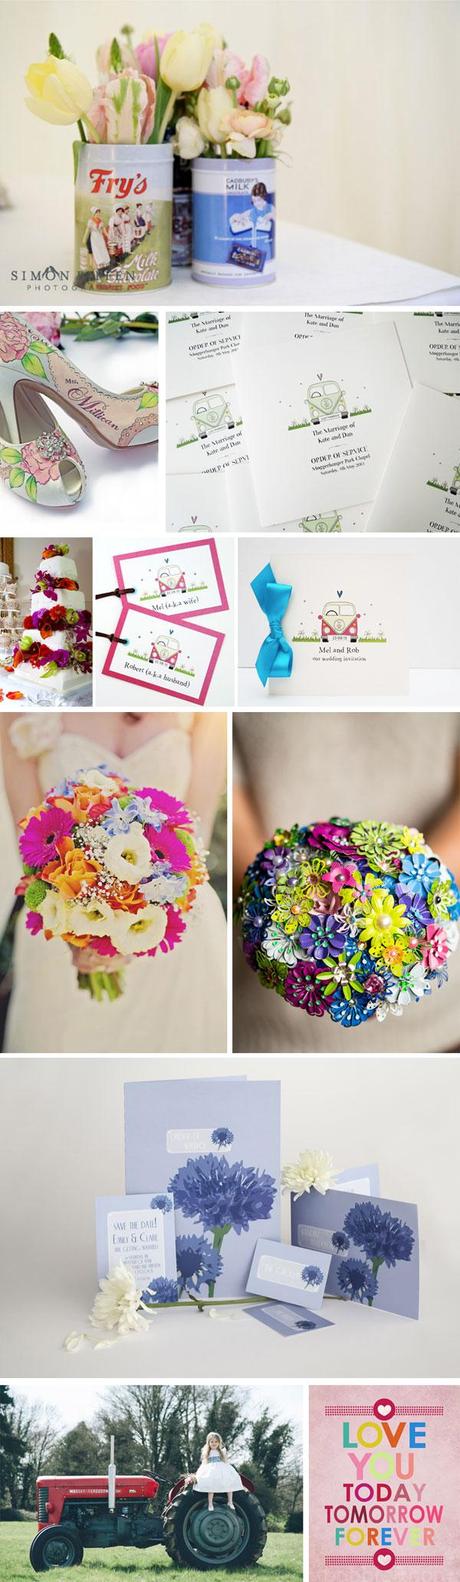 flower power wedding ideas